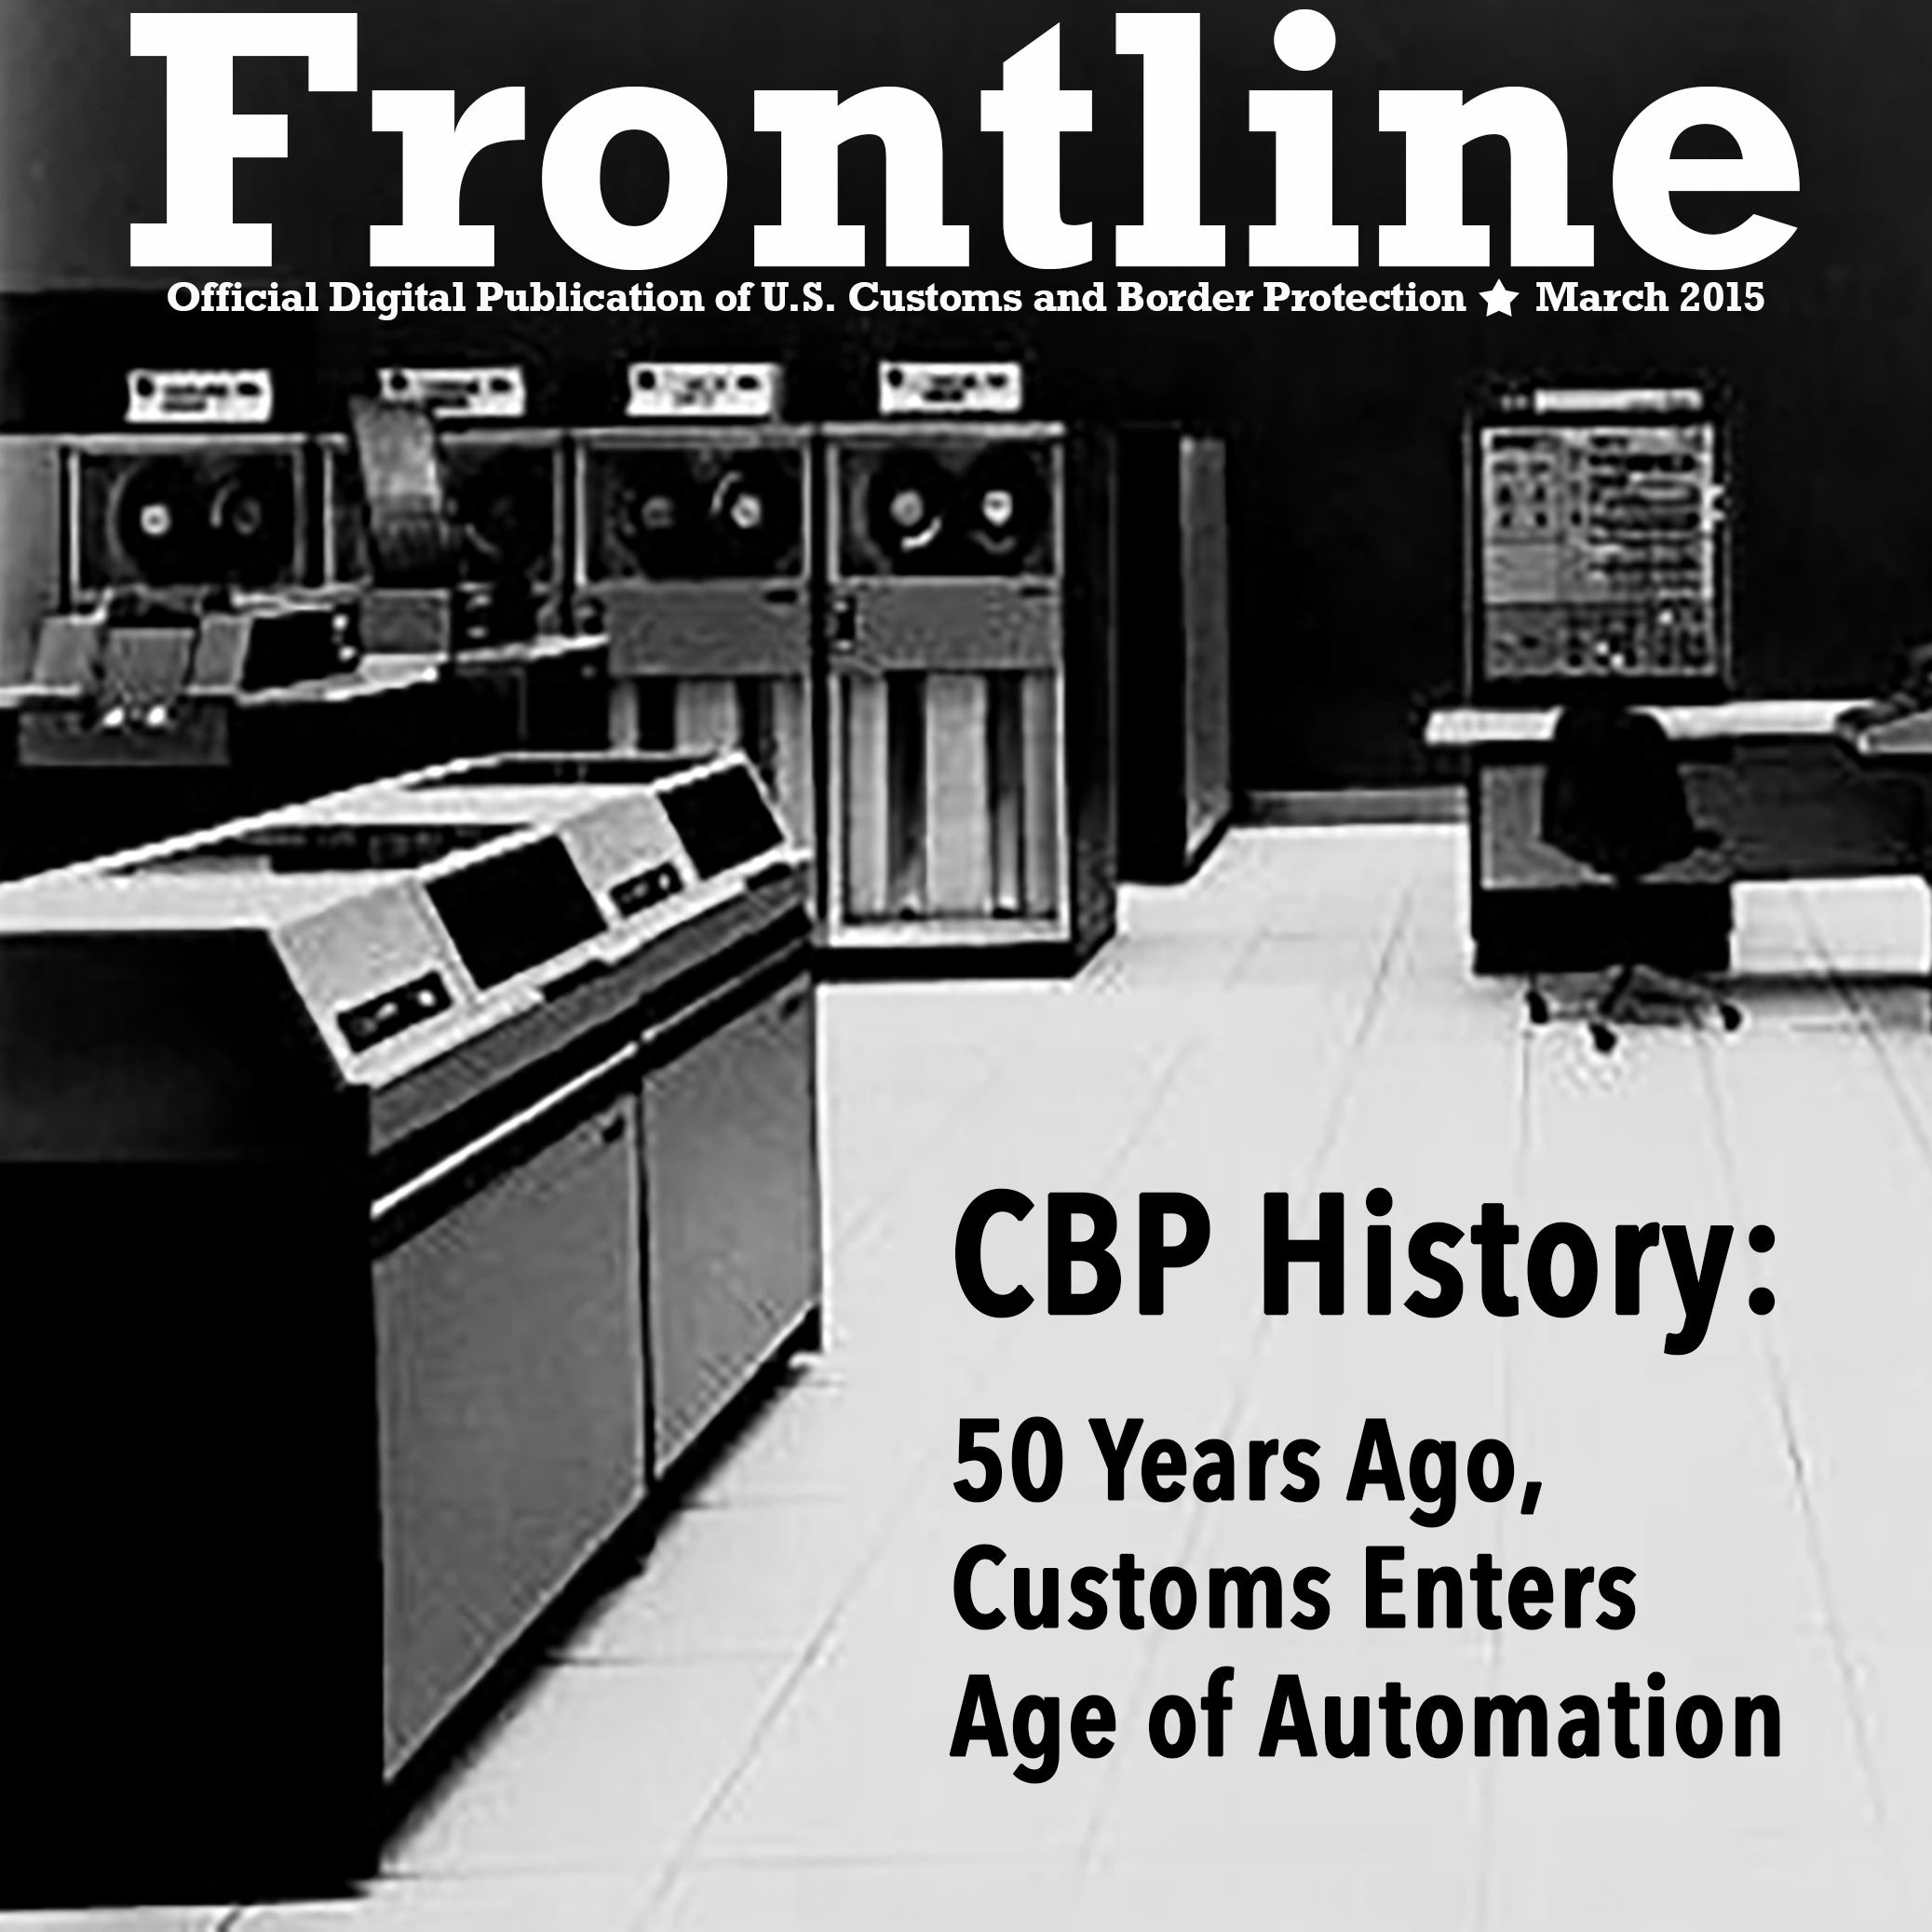 Photo of 1960's IBM mainframe computer